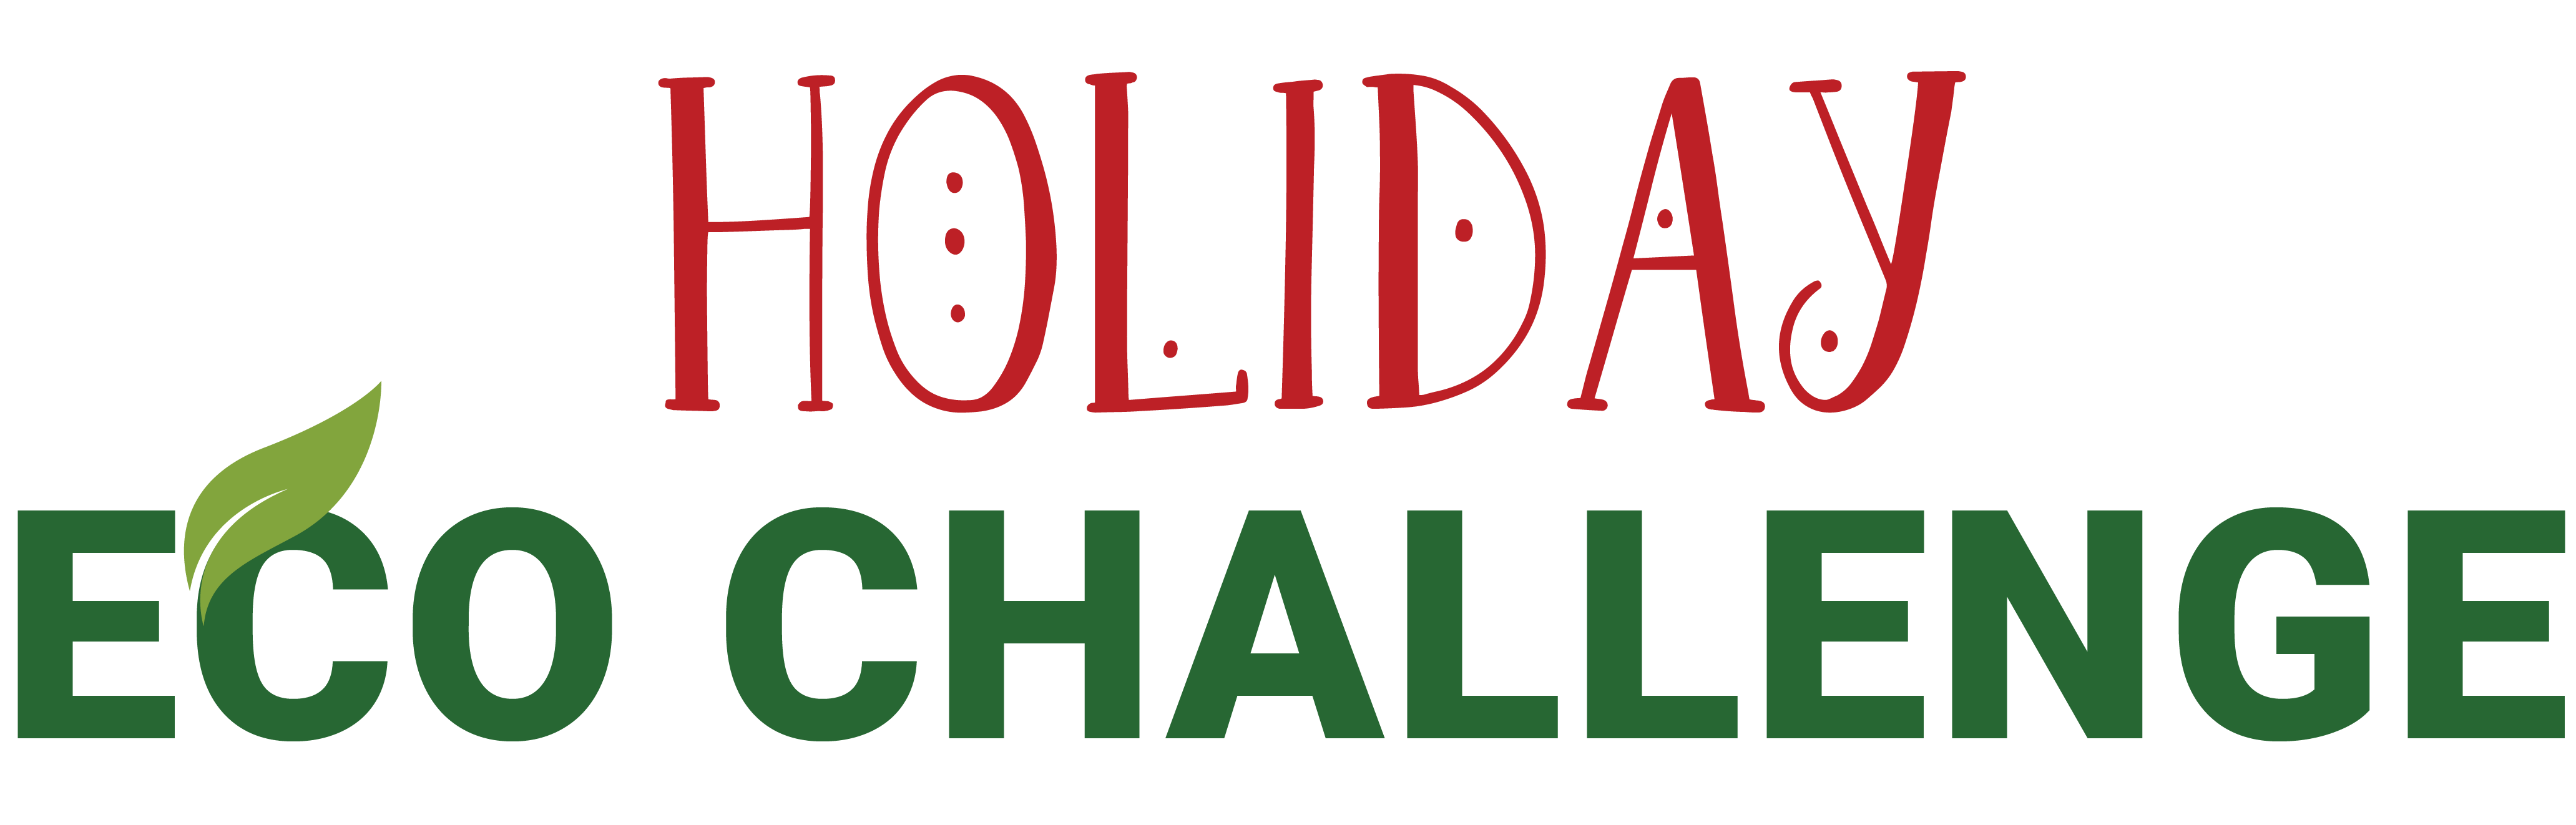 Holiday Eco Challenge logo